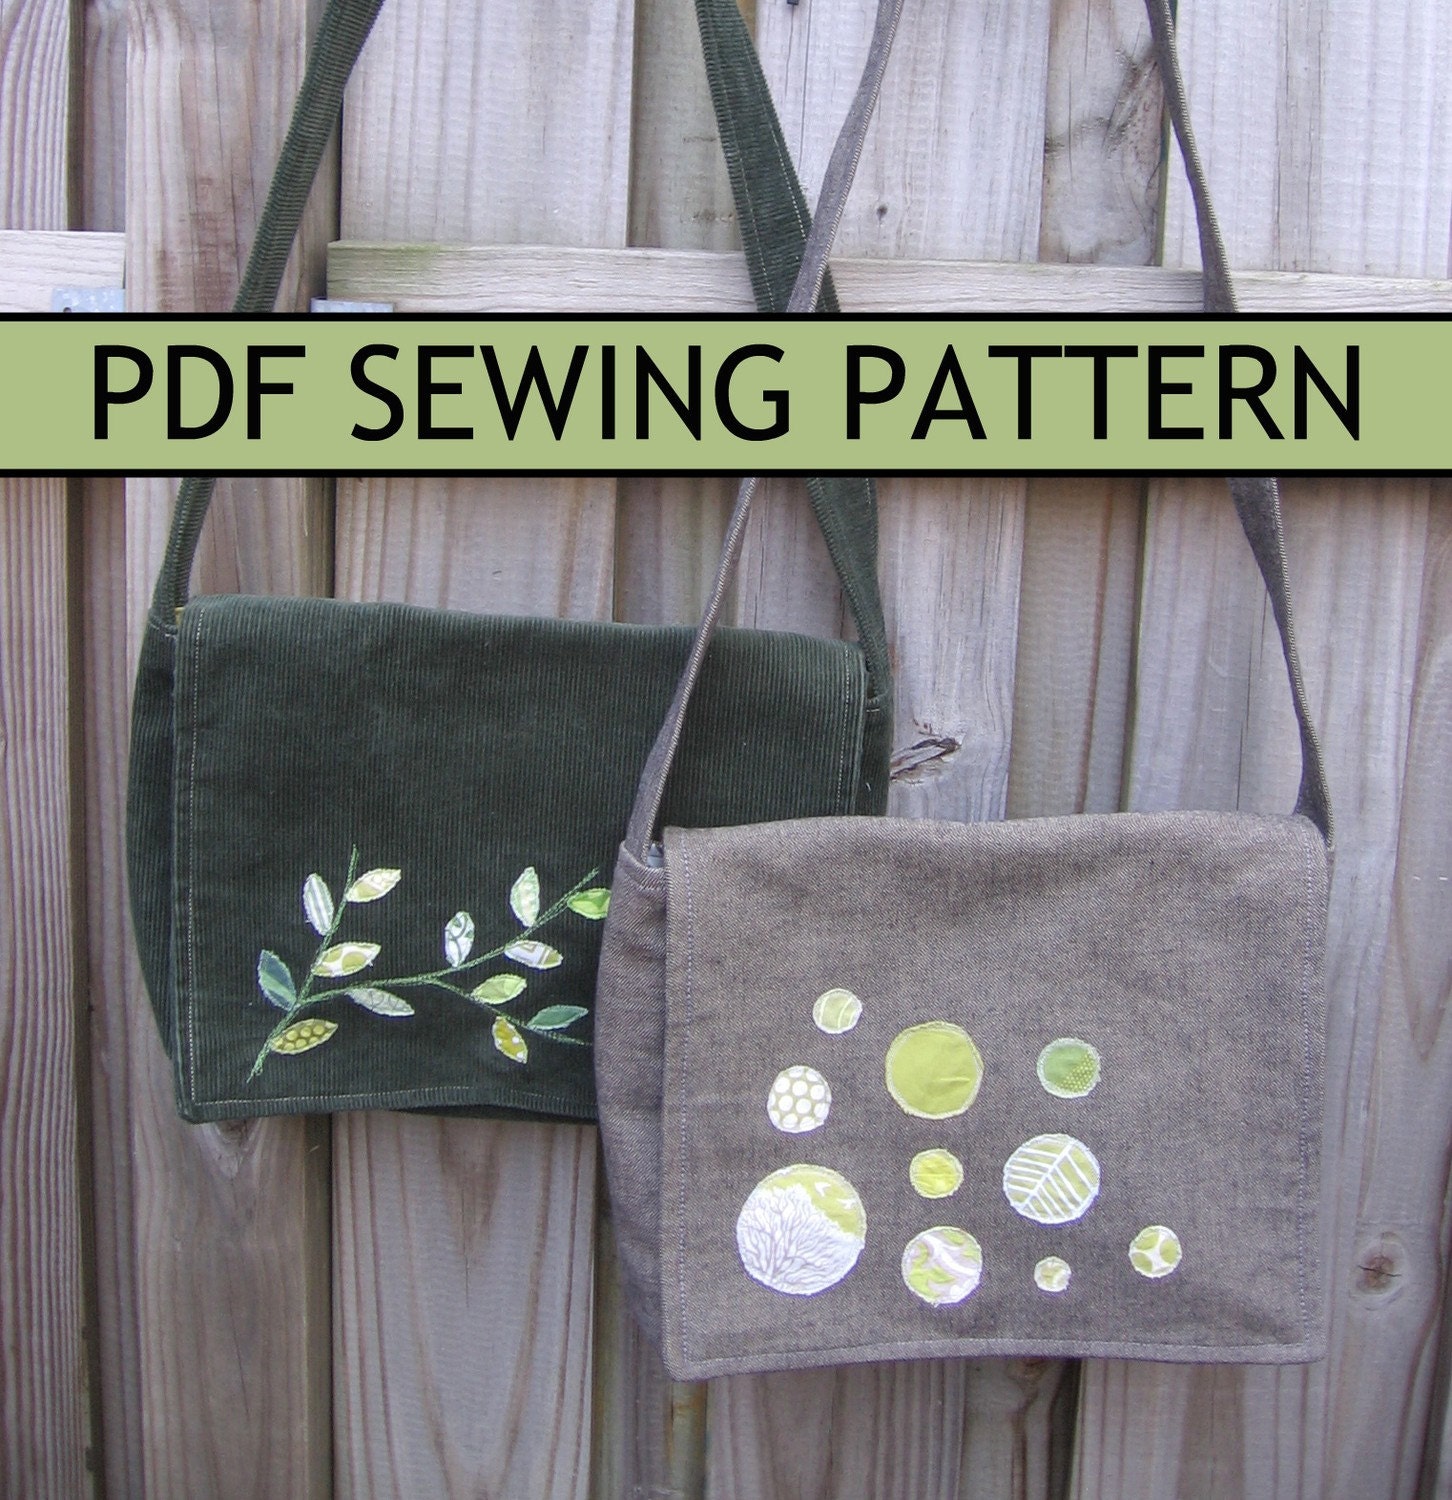 Free-Motion Applique Messenger Bag PDF Sewing Pattern